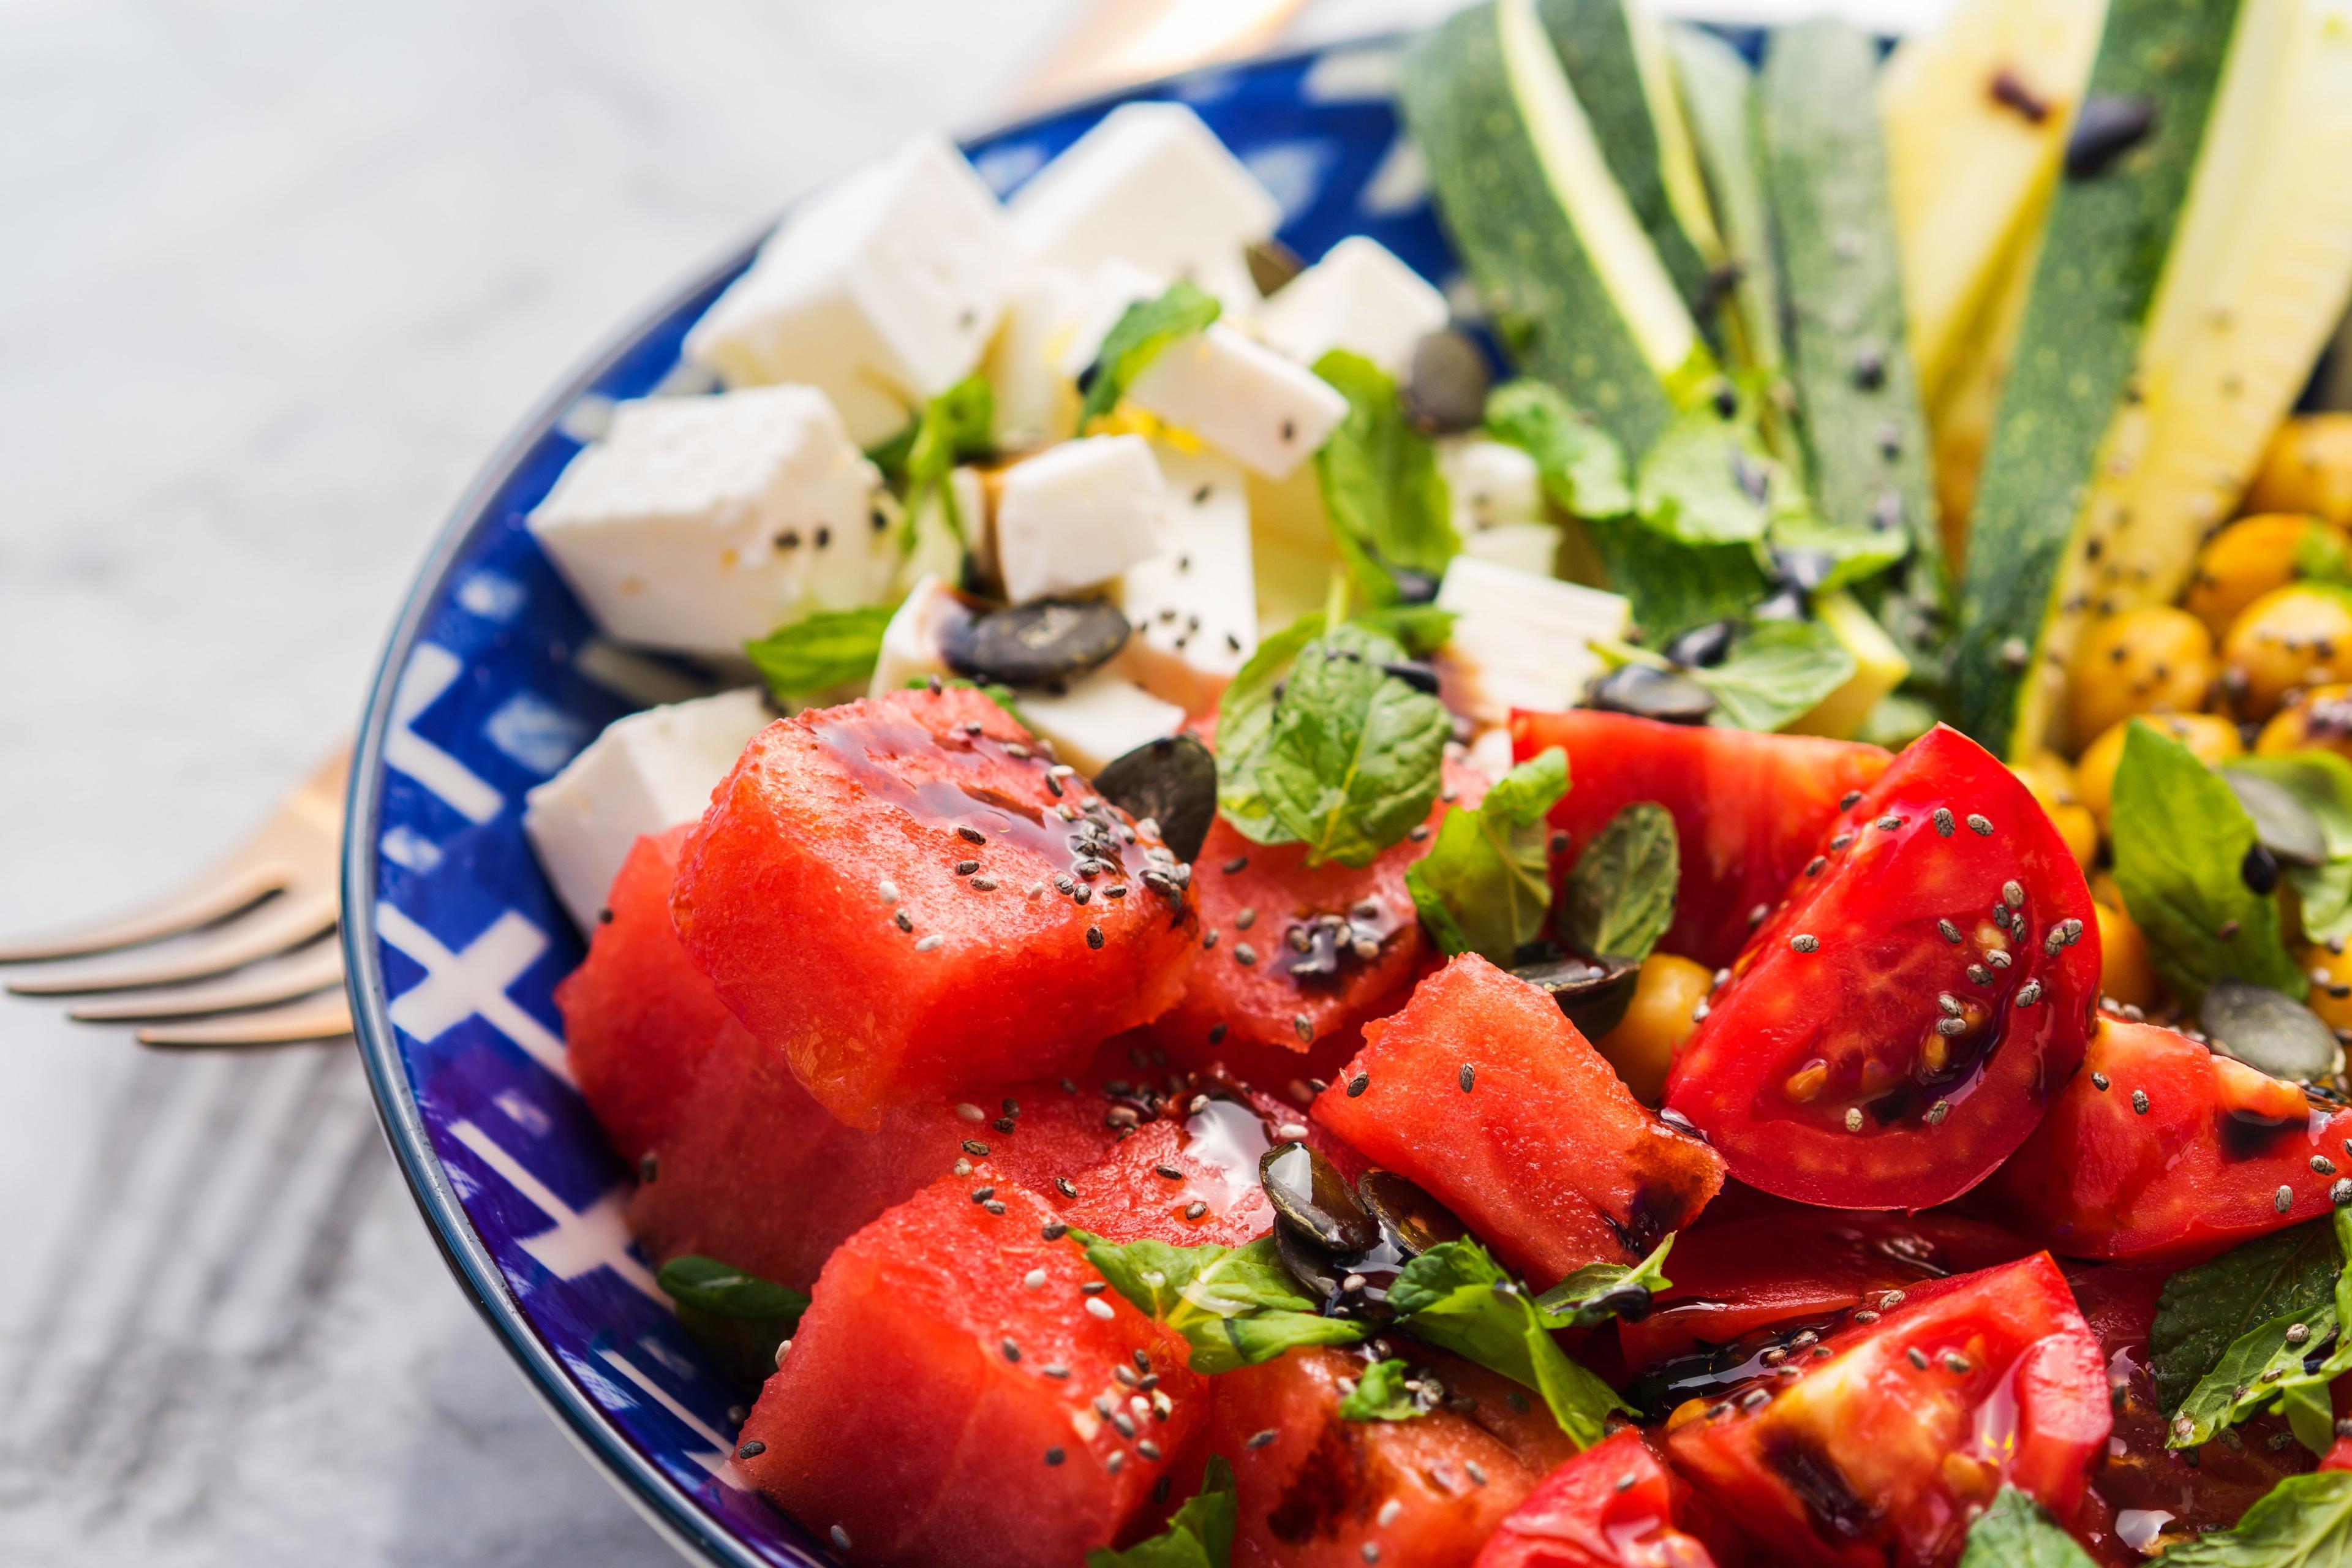 Watermelon and Tomato Salad image